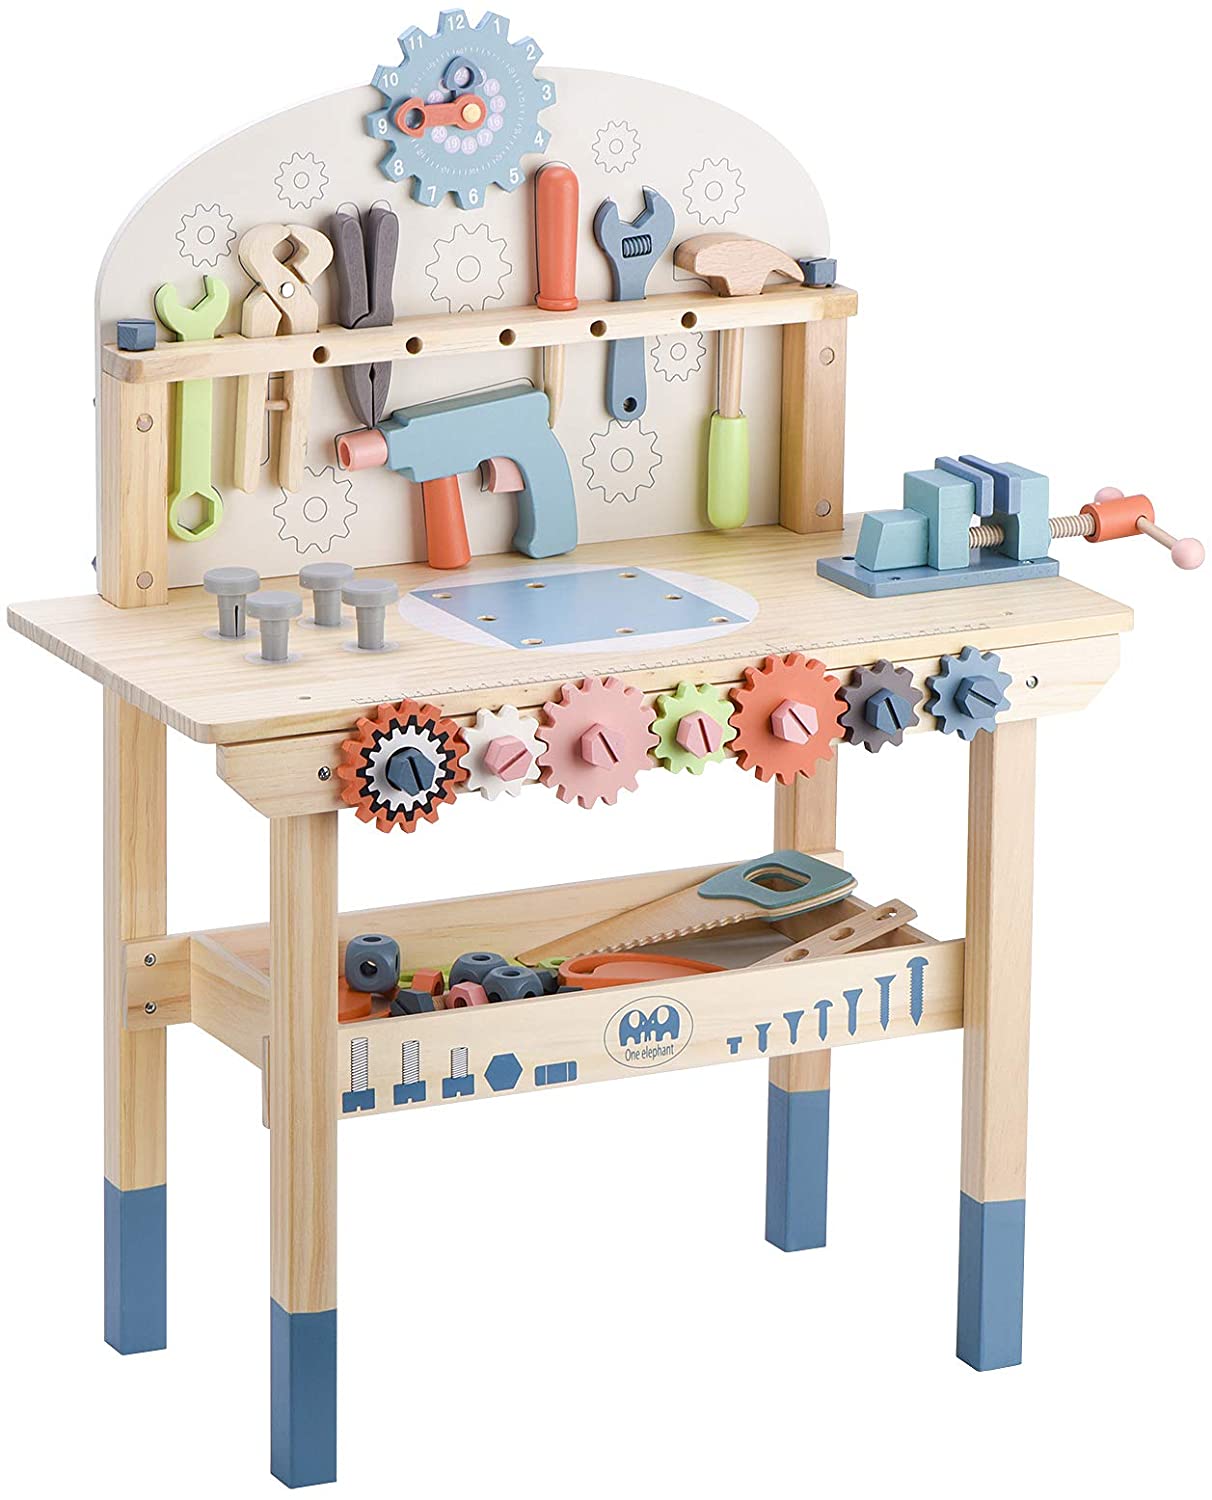 NIB Construction Workbench for Kids Portable Boys & Girls Toy Playset 